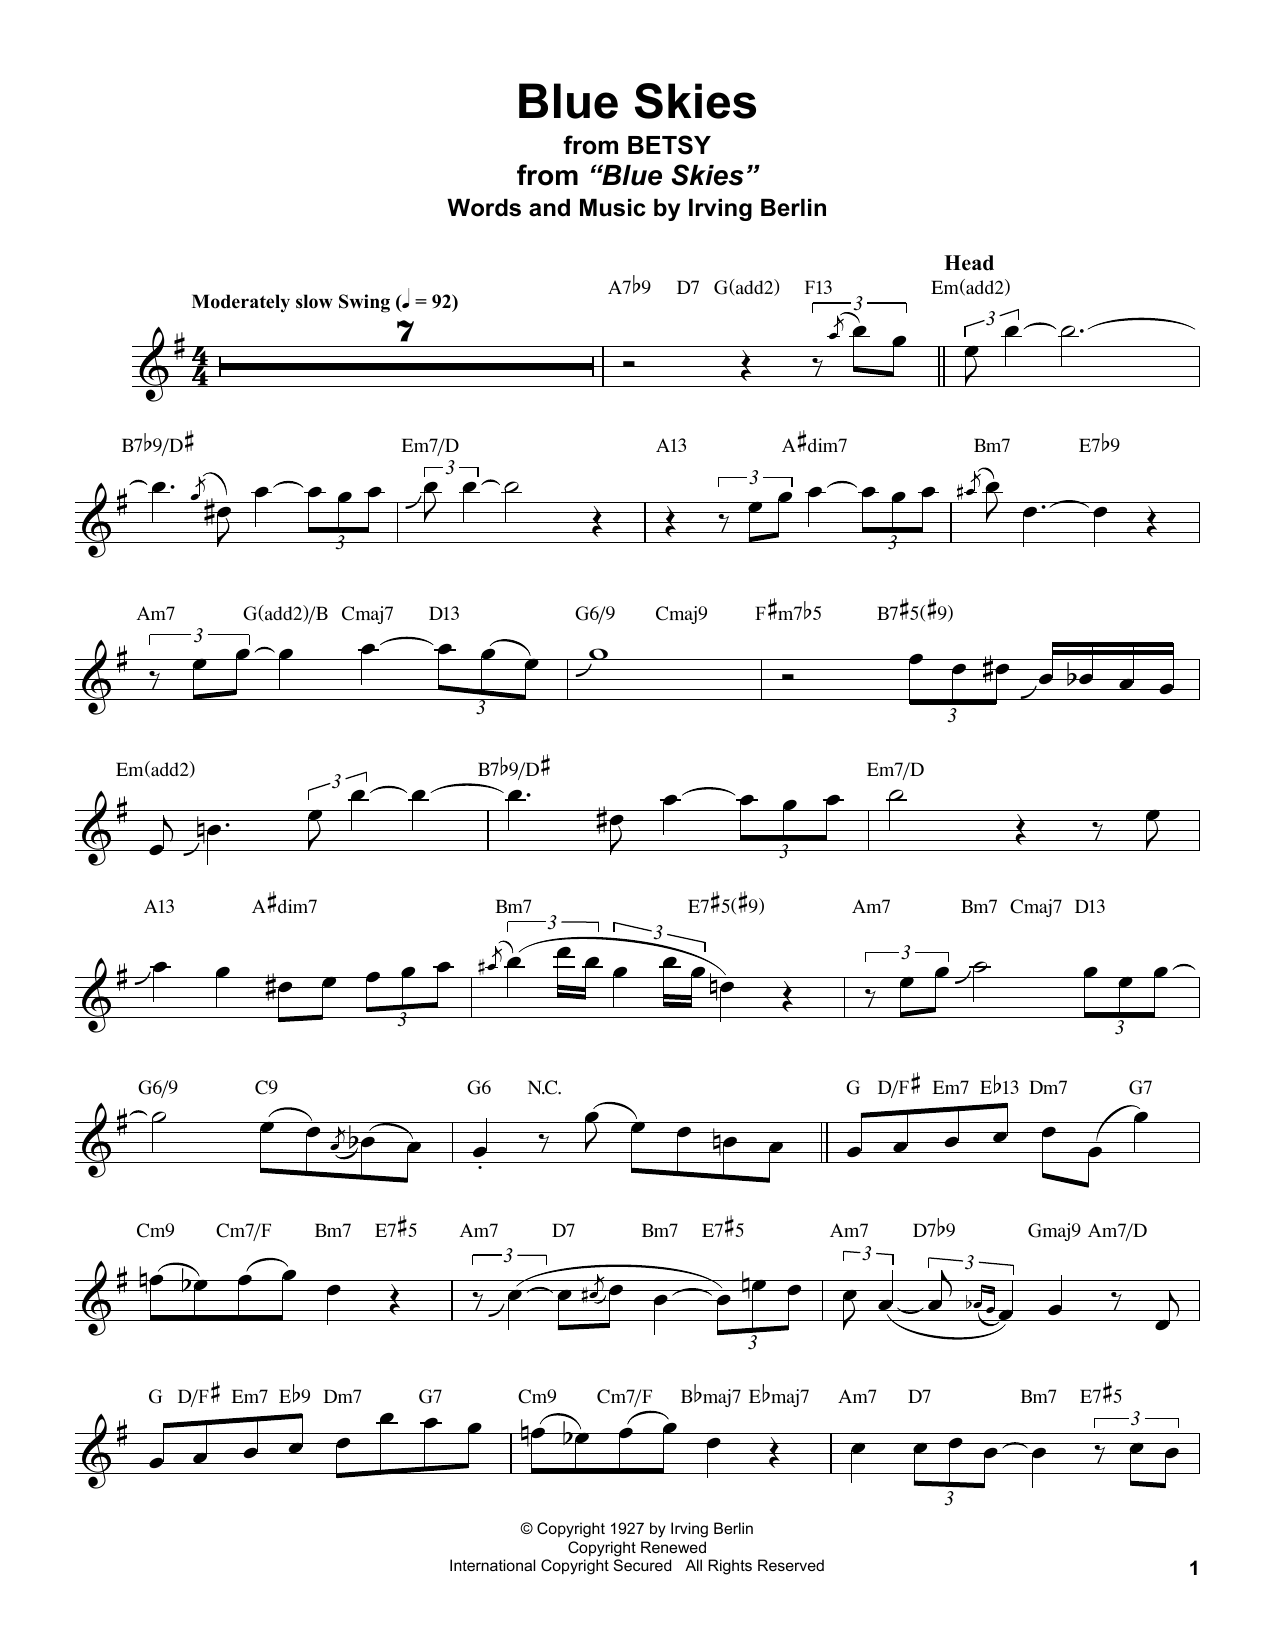 Stan Getz Blue Skies Sheet Music Notes & Chords for Tenor Sax Transcription - Download or Print PDF